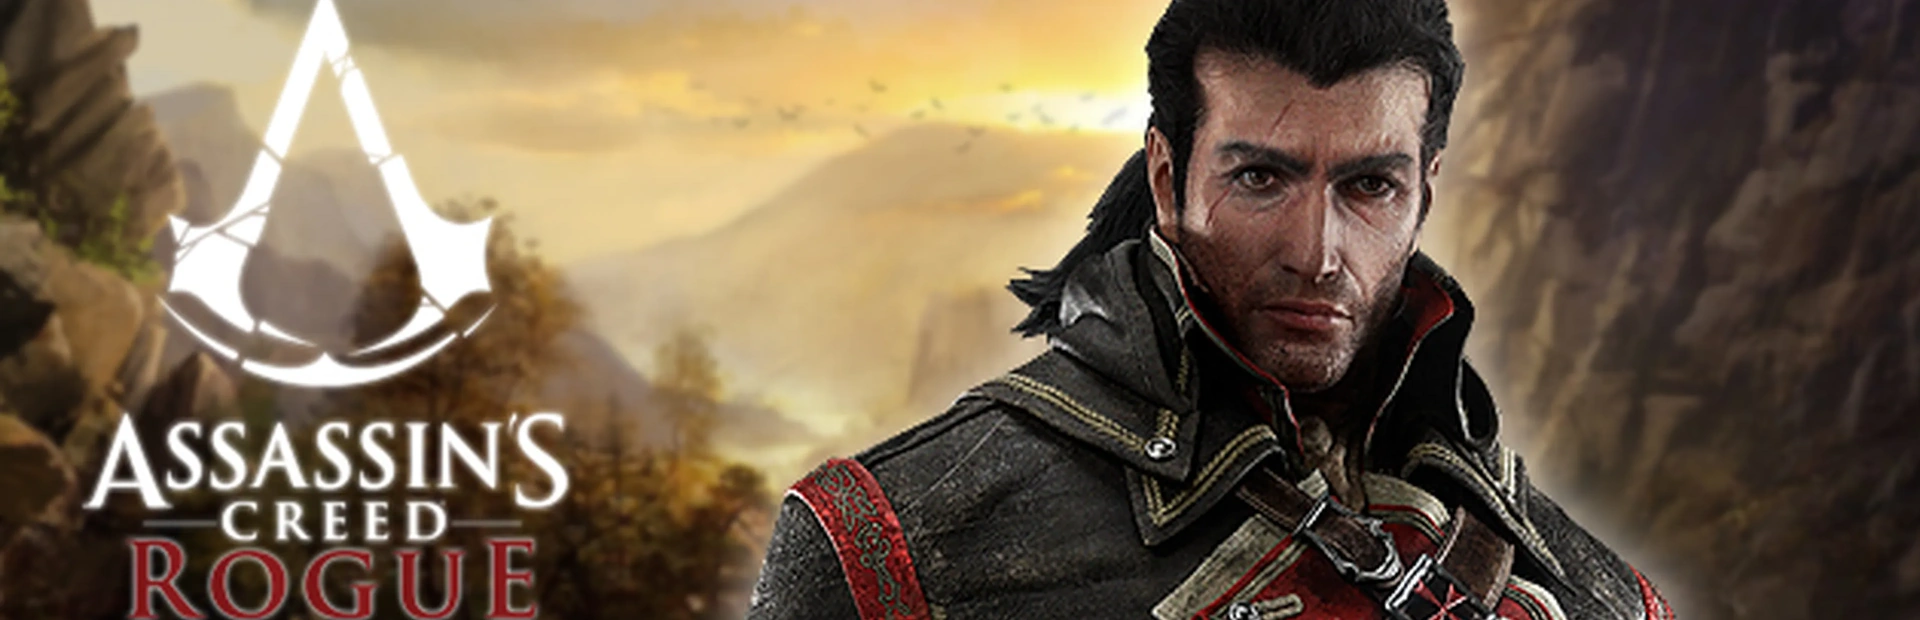 Assassins Creed Rogue.banner4